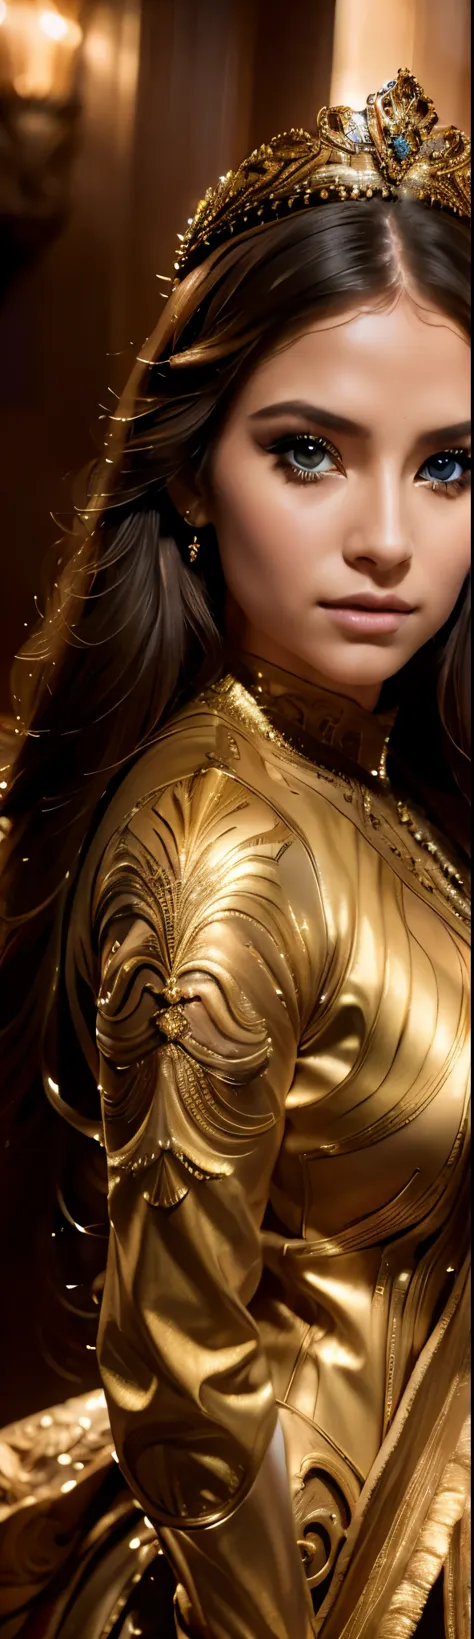 a beautiful girl, princess Irulan from the movie Dune, detailed portrait, detailed face, beautiful eyes, long eyelashes, detaile...